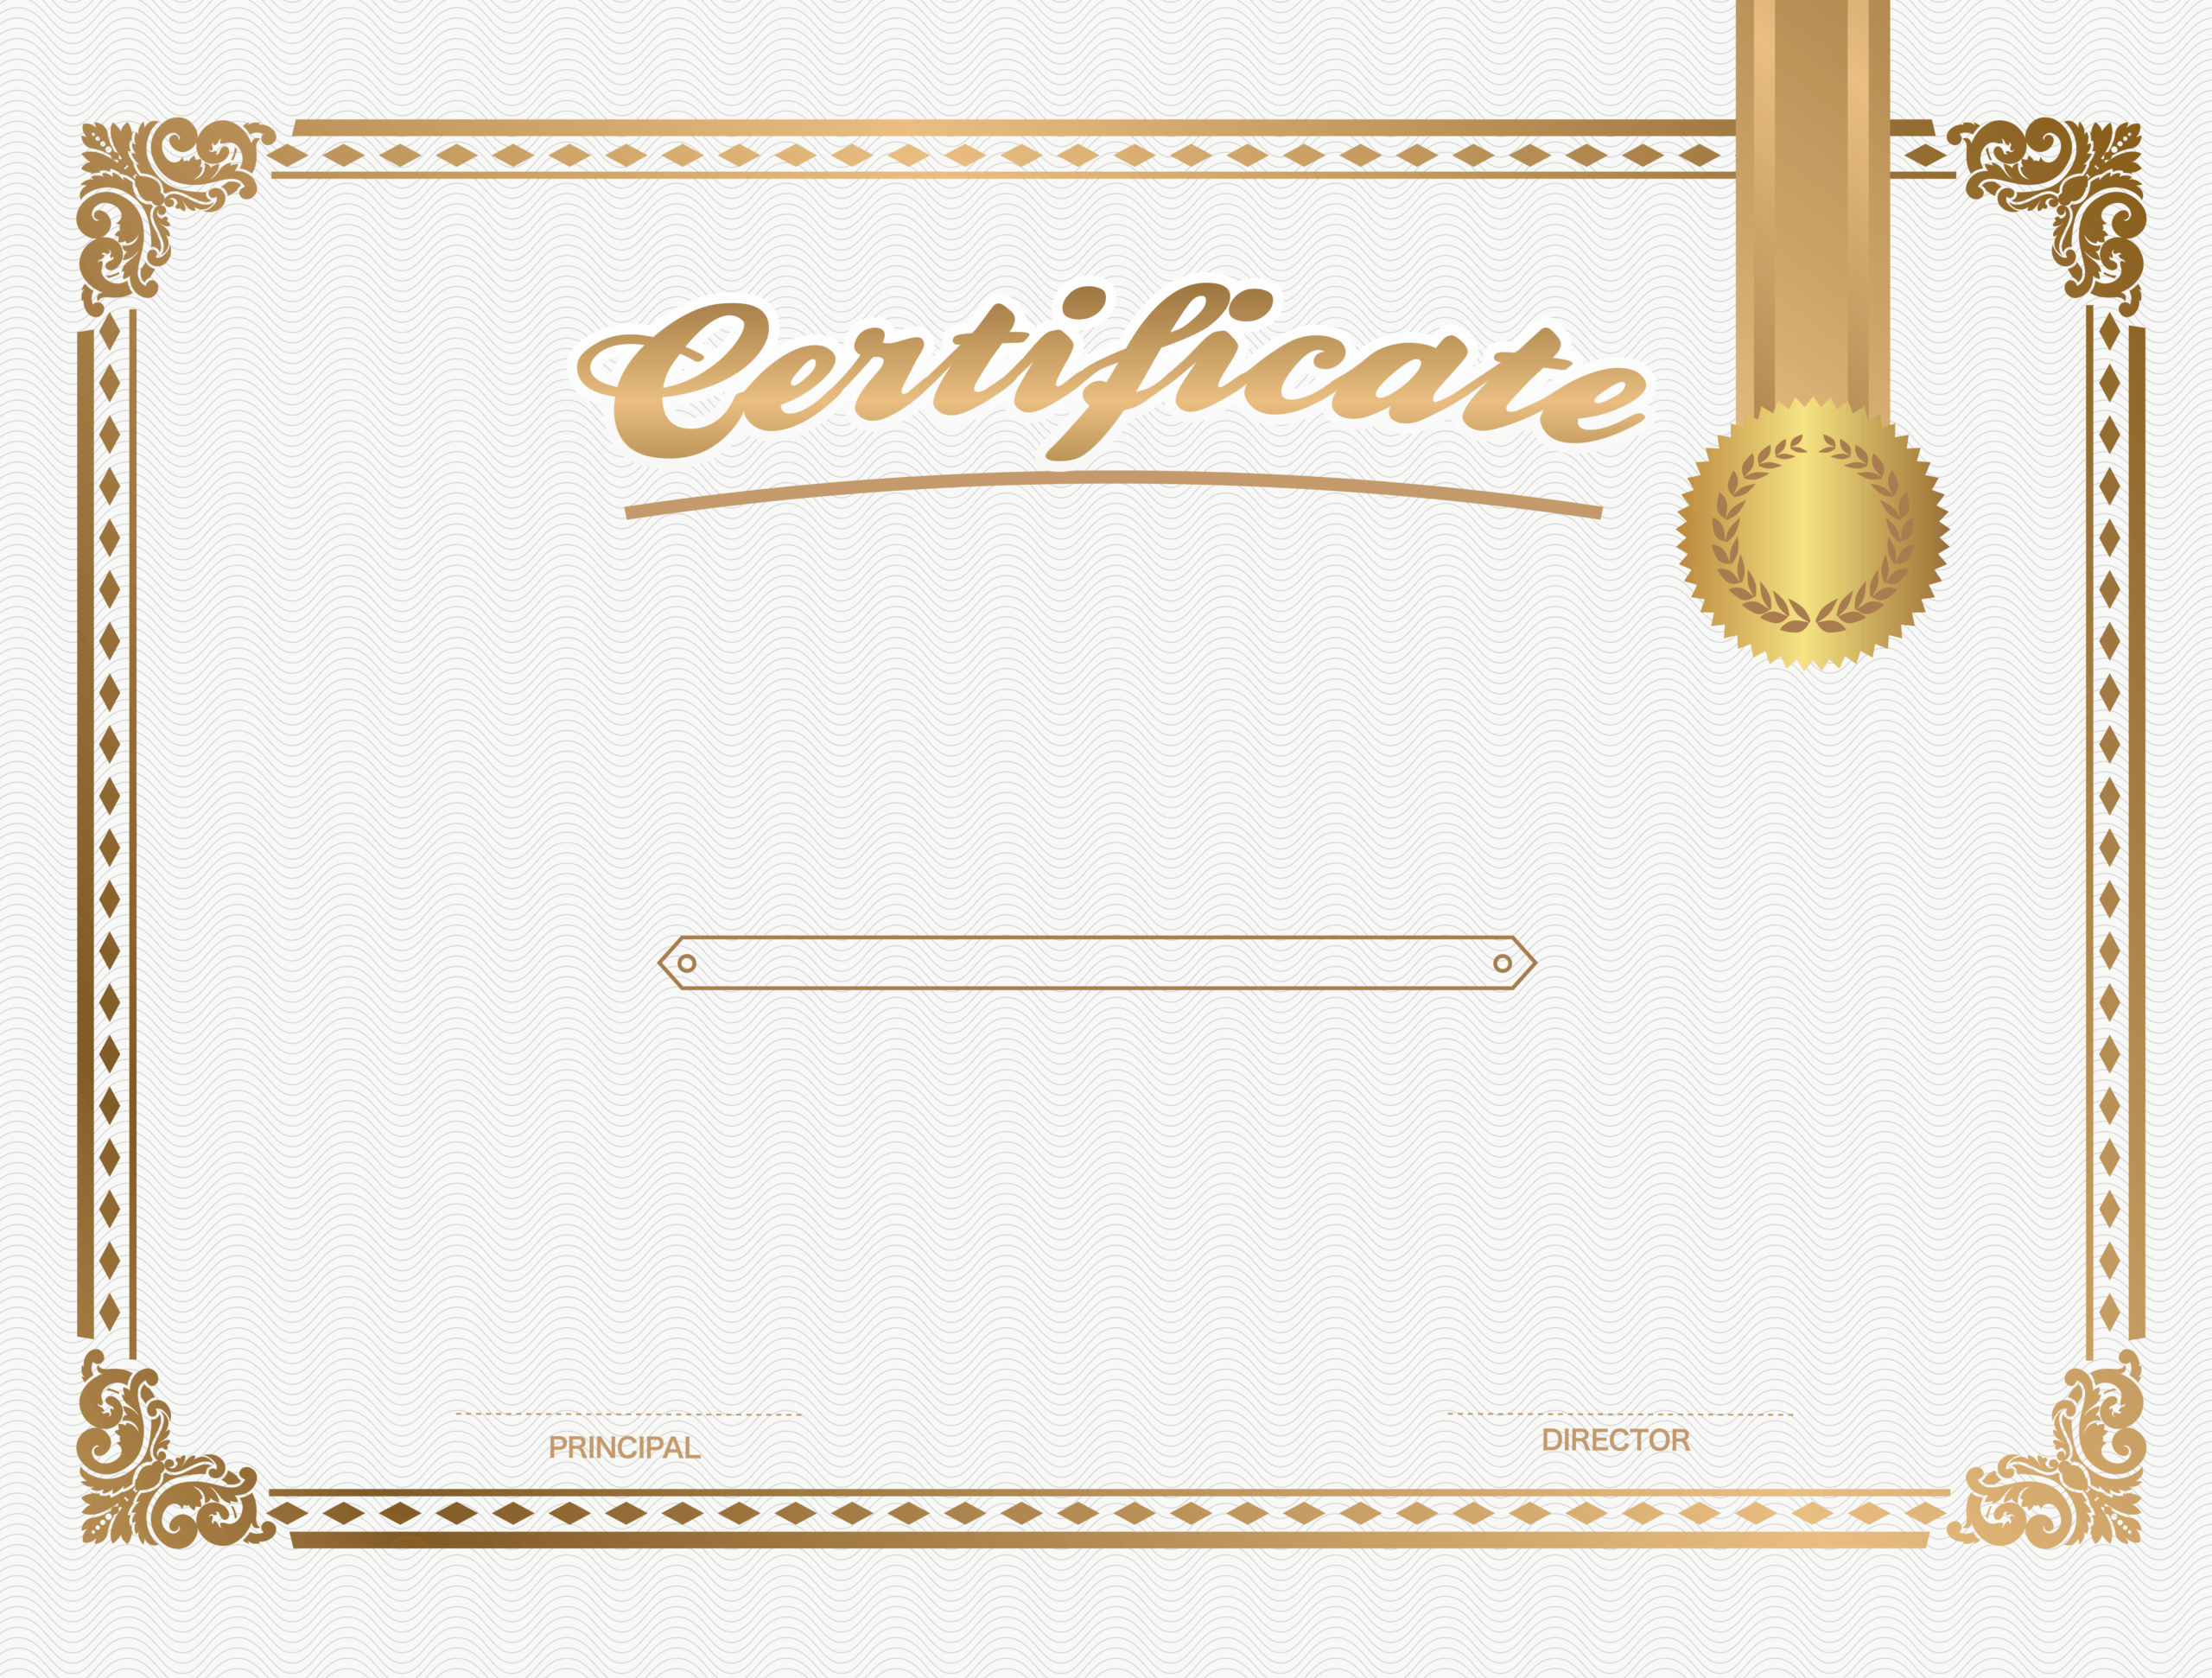 Фон для сертификата